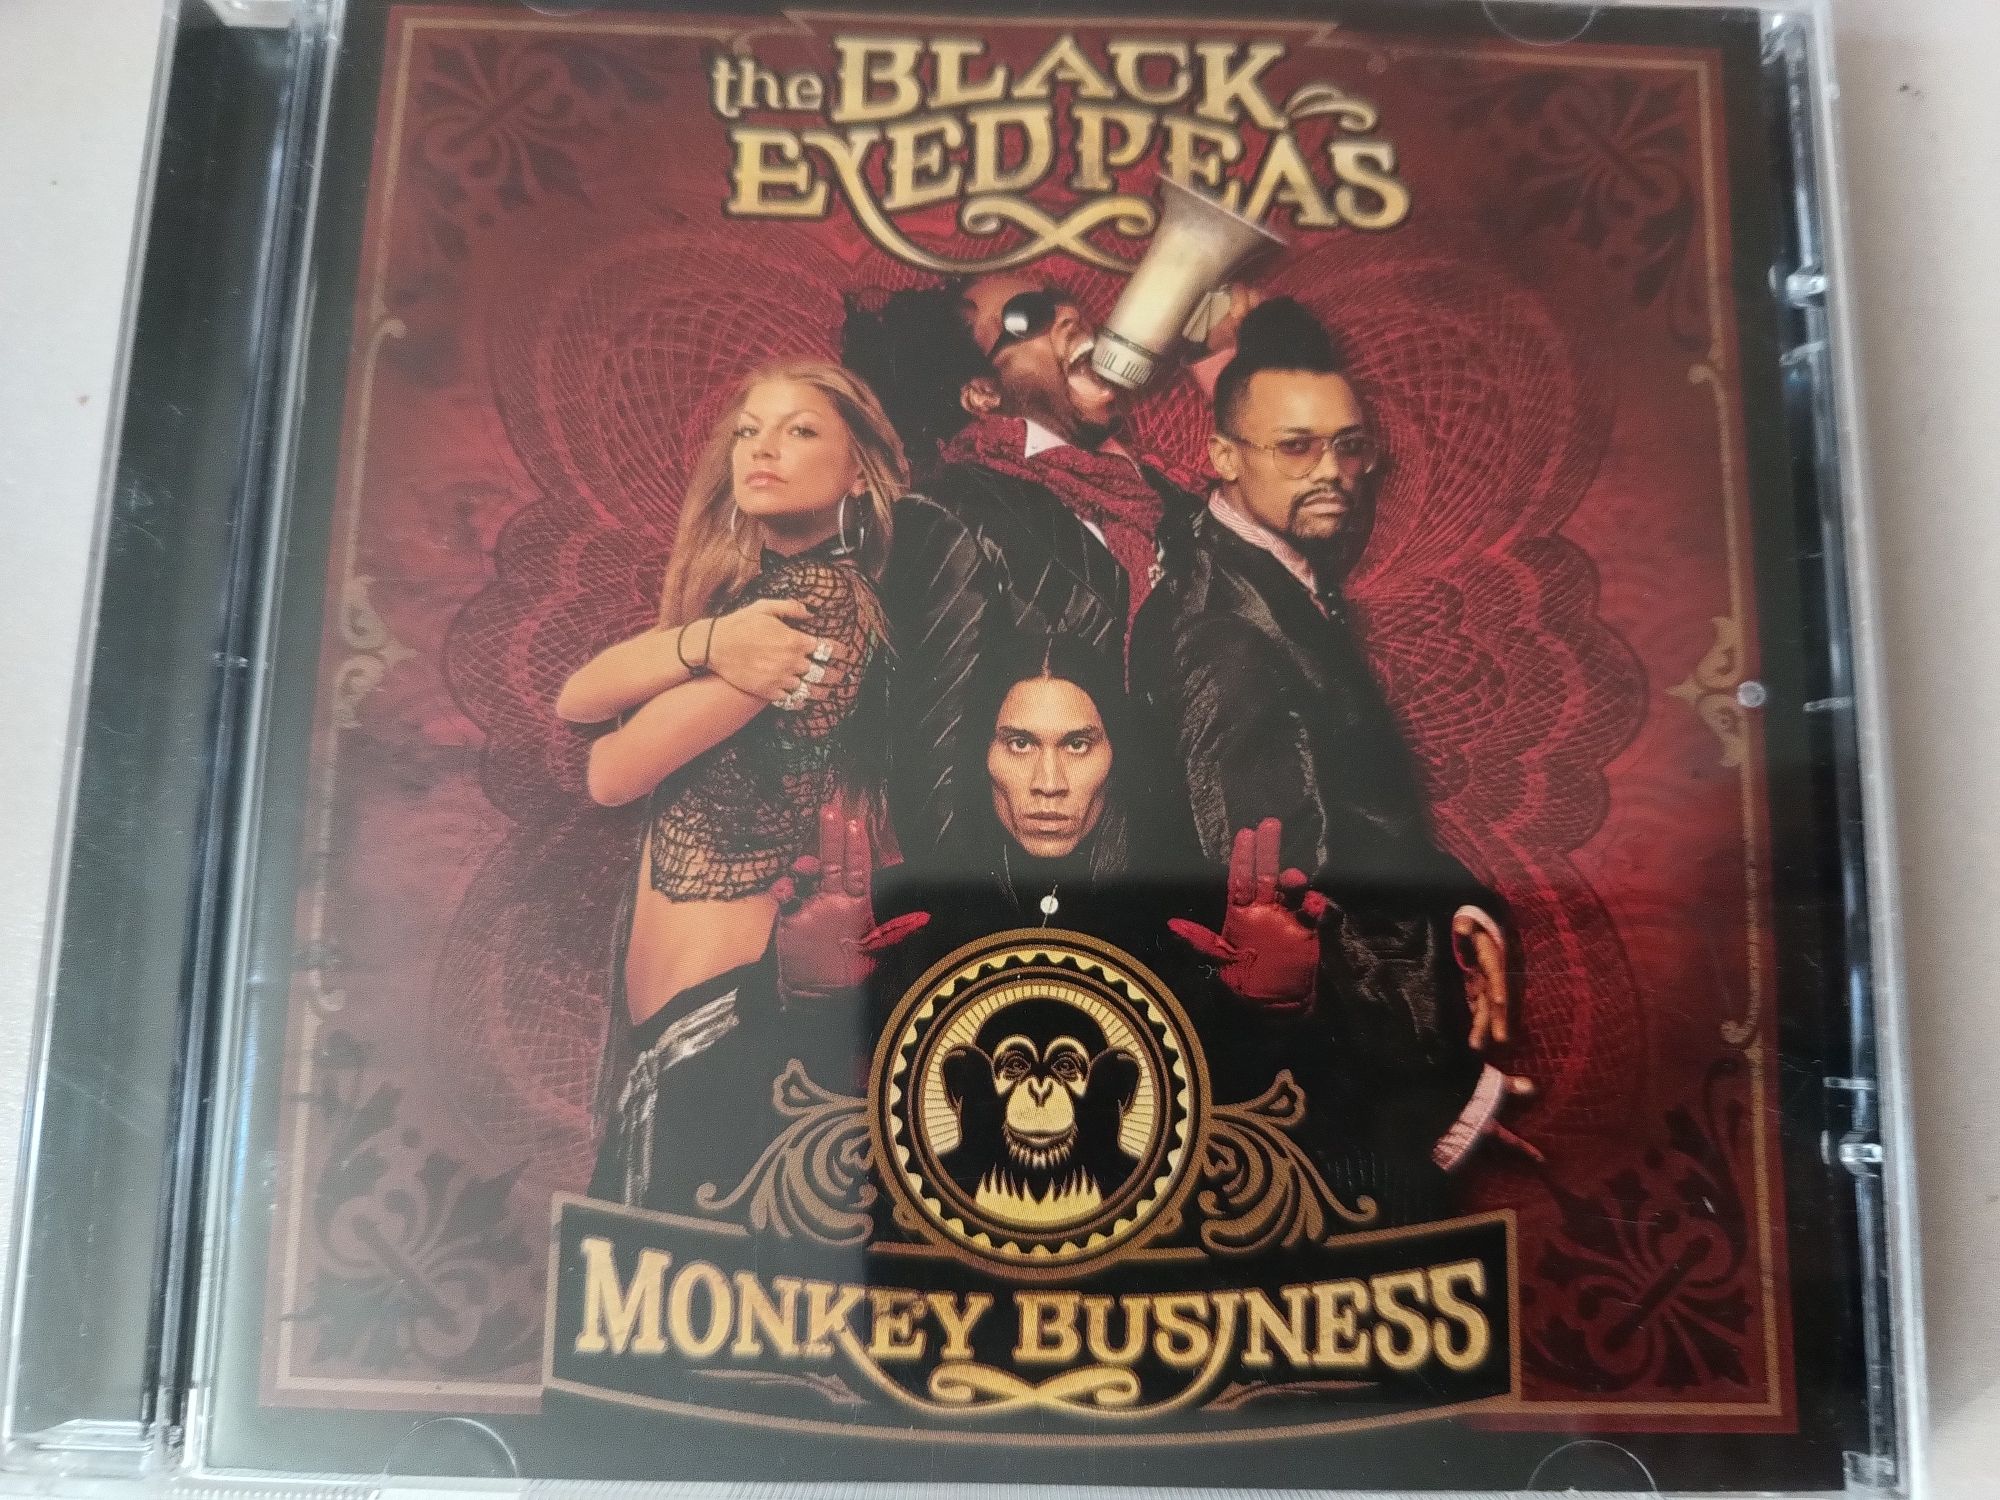 The black eyed peas-monkey business cd